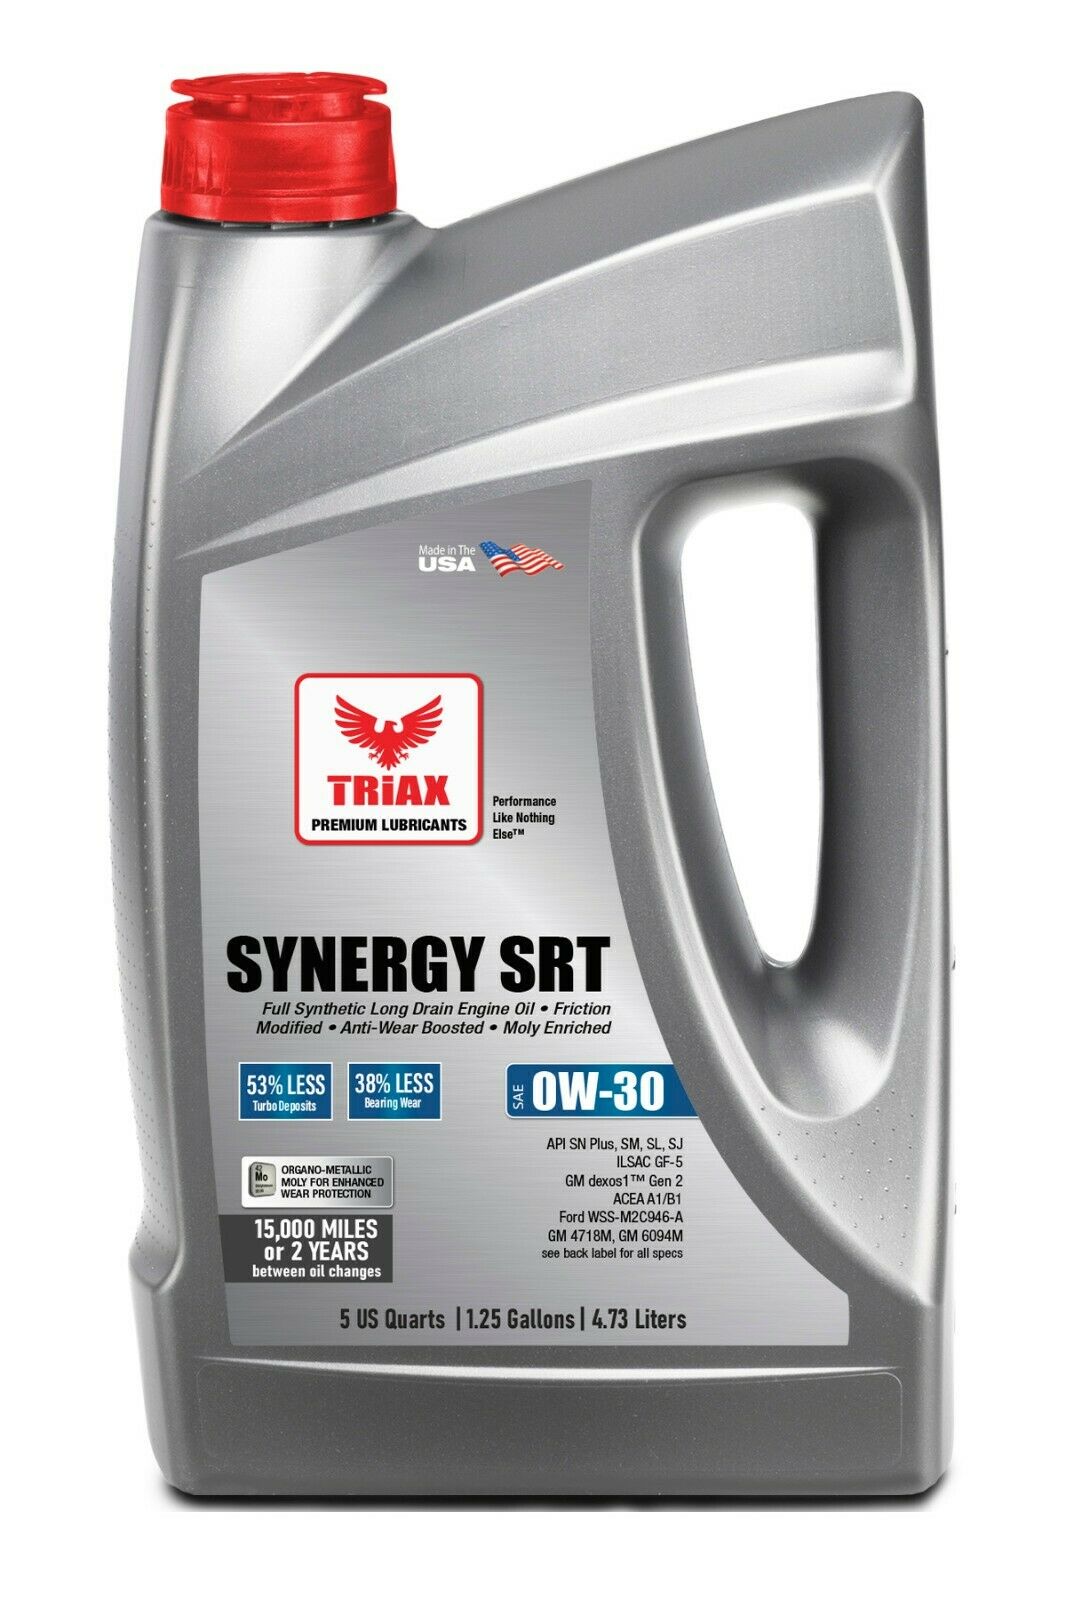 TRIAX Synergy SRT 0W-30 Full Synthetic API SN, DEXOS 1 Gen2